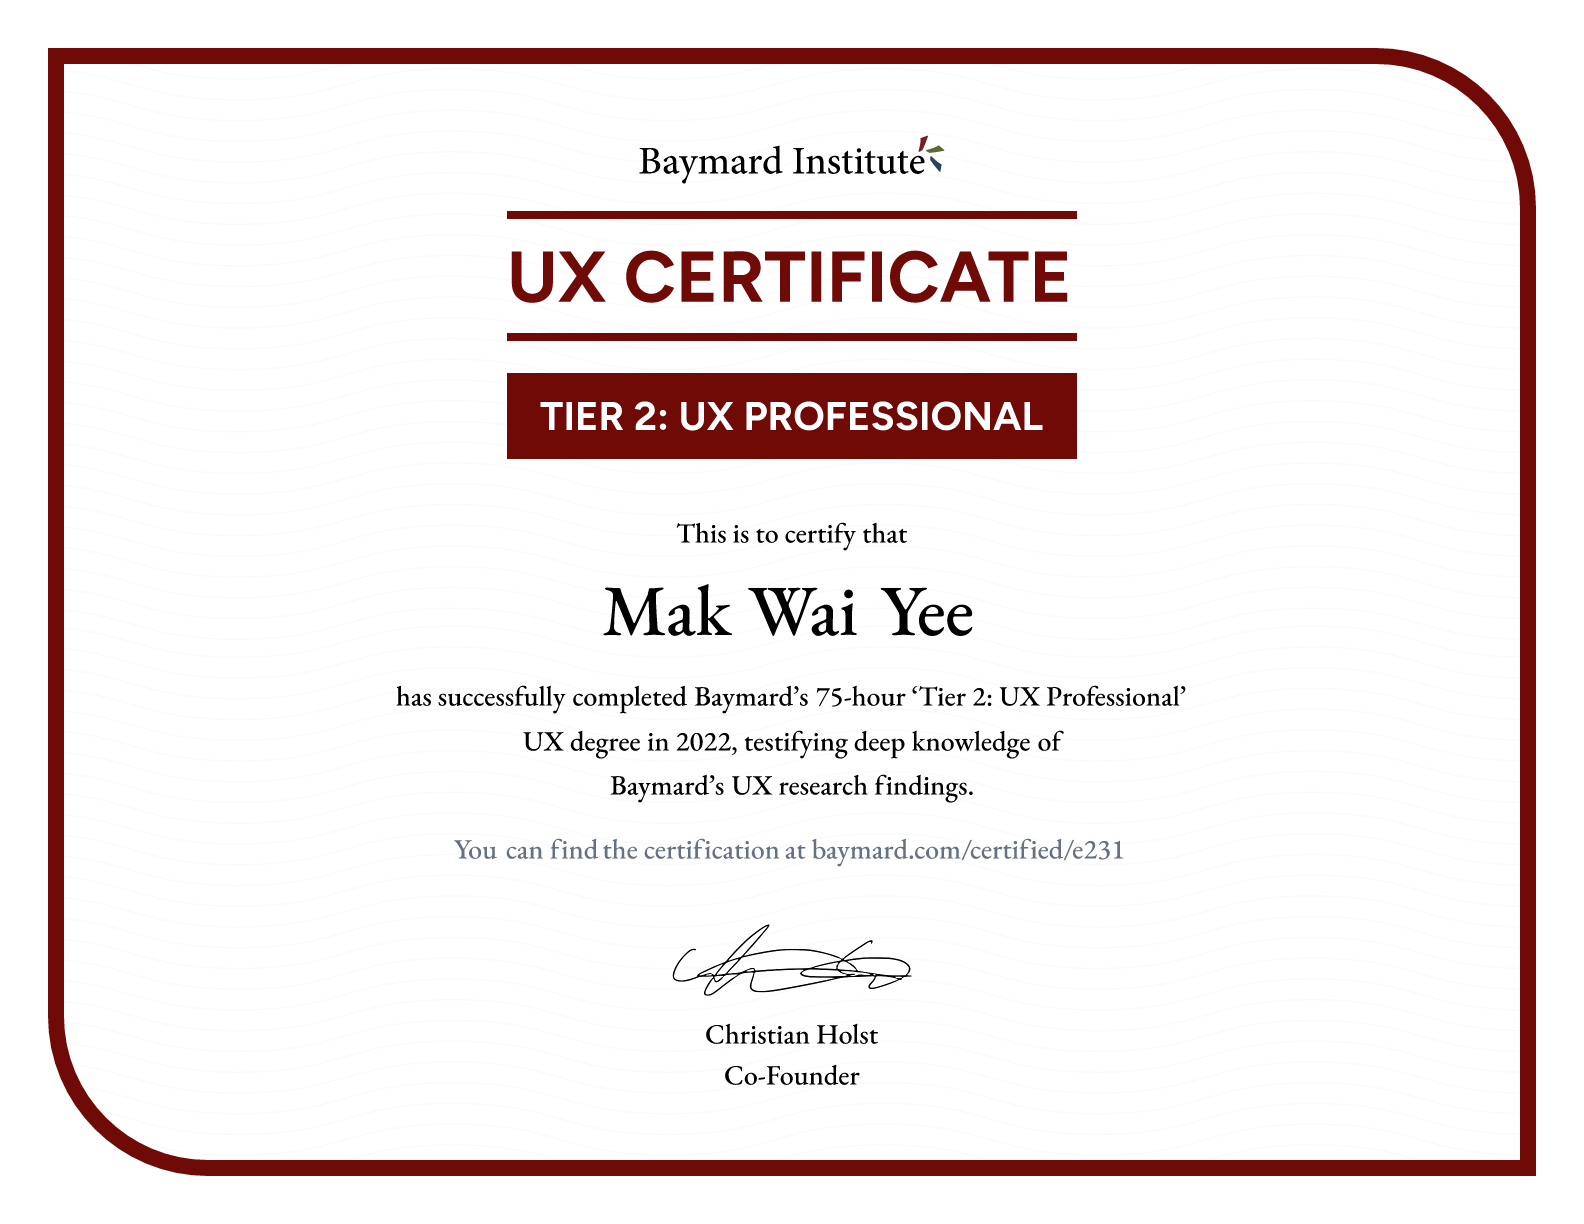 Mak Wai Yee’s certificate